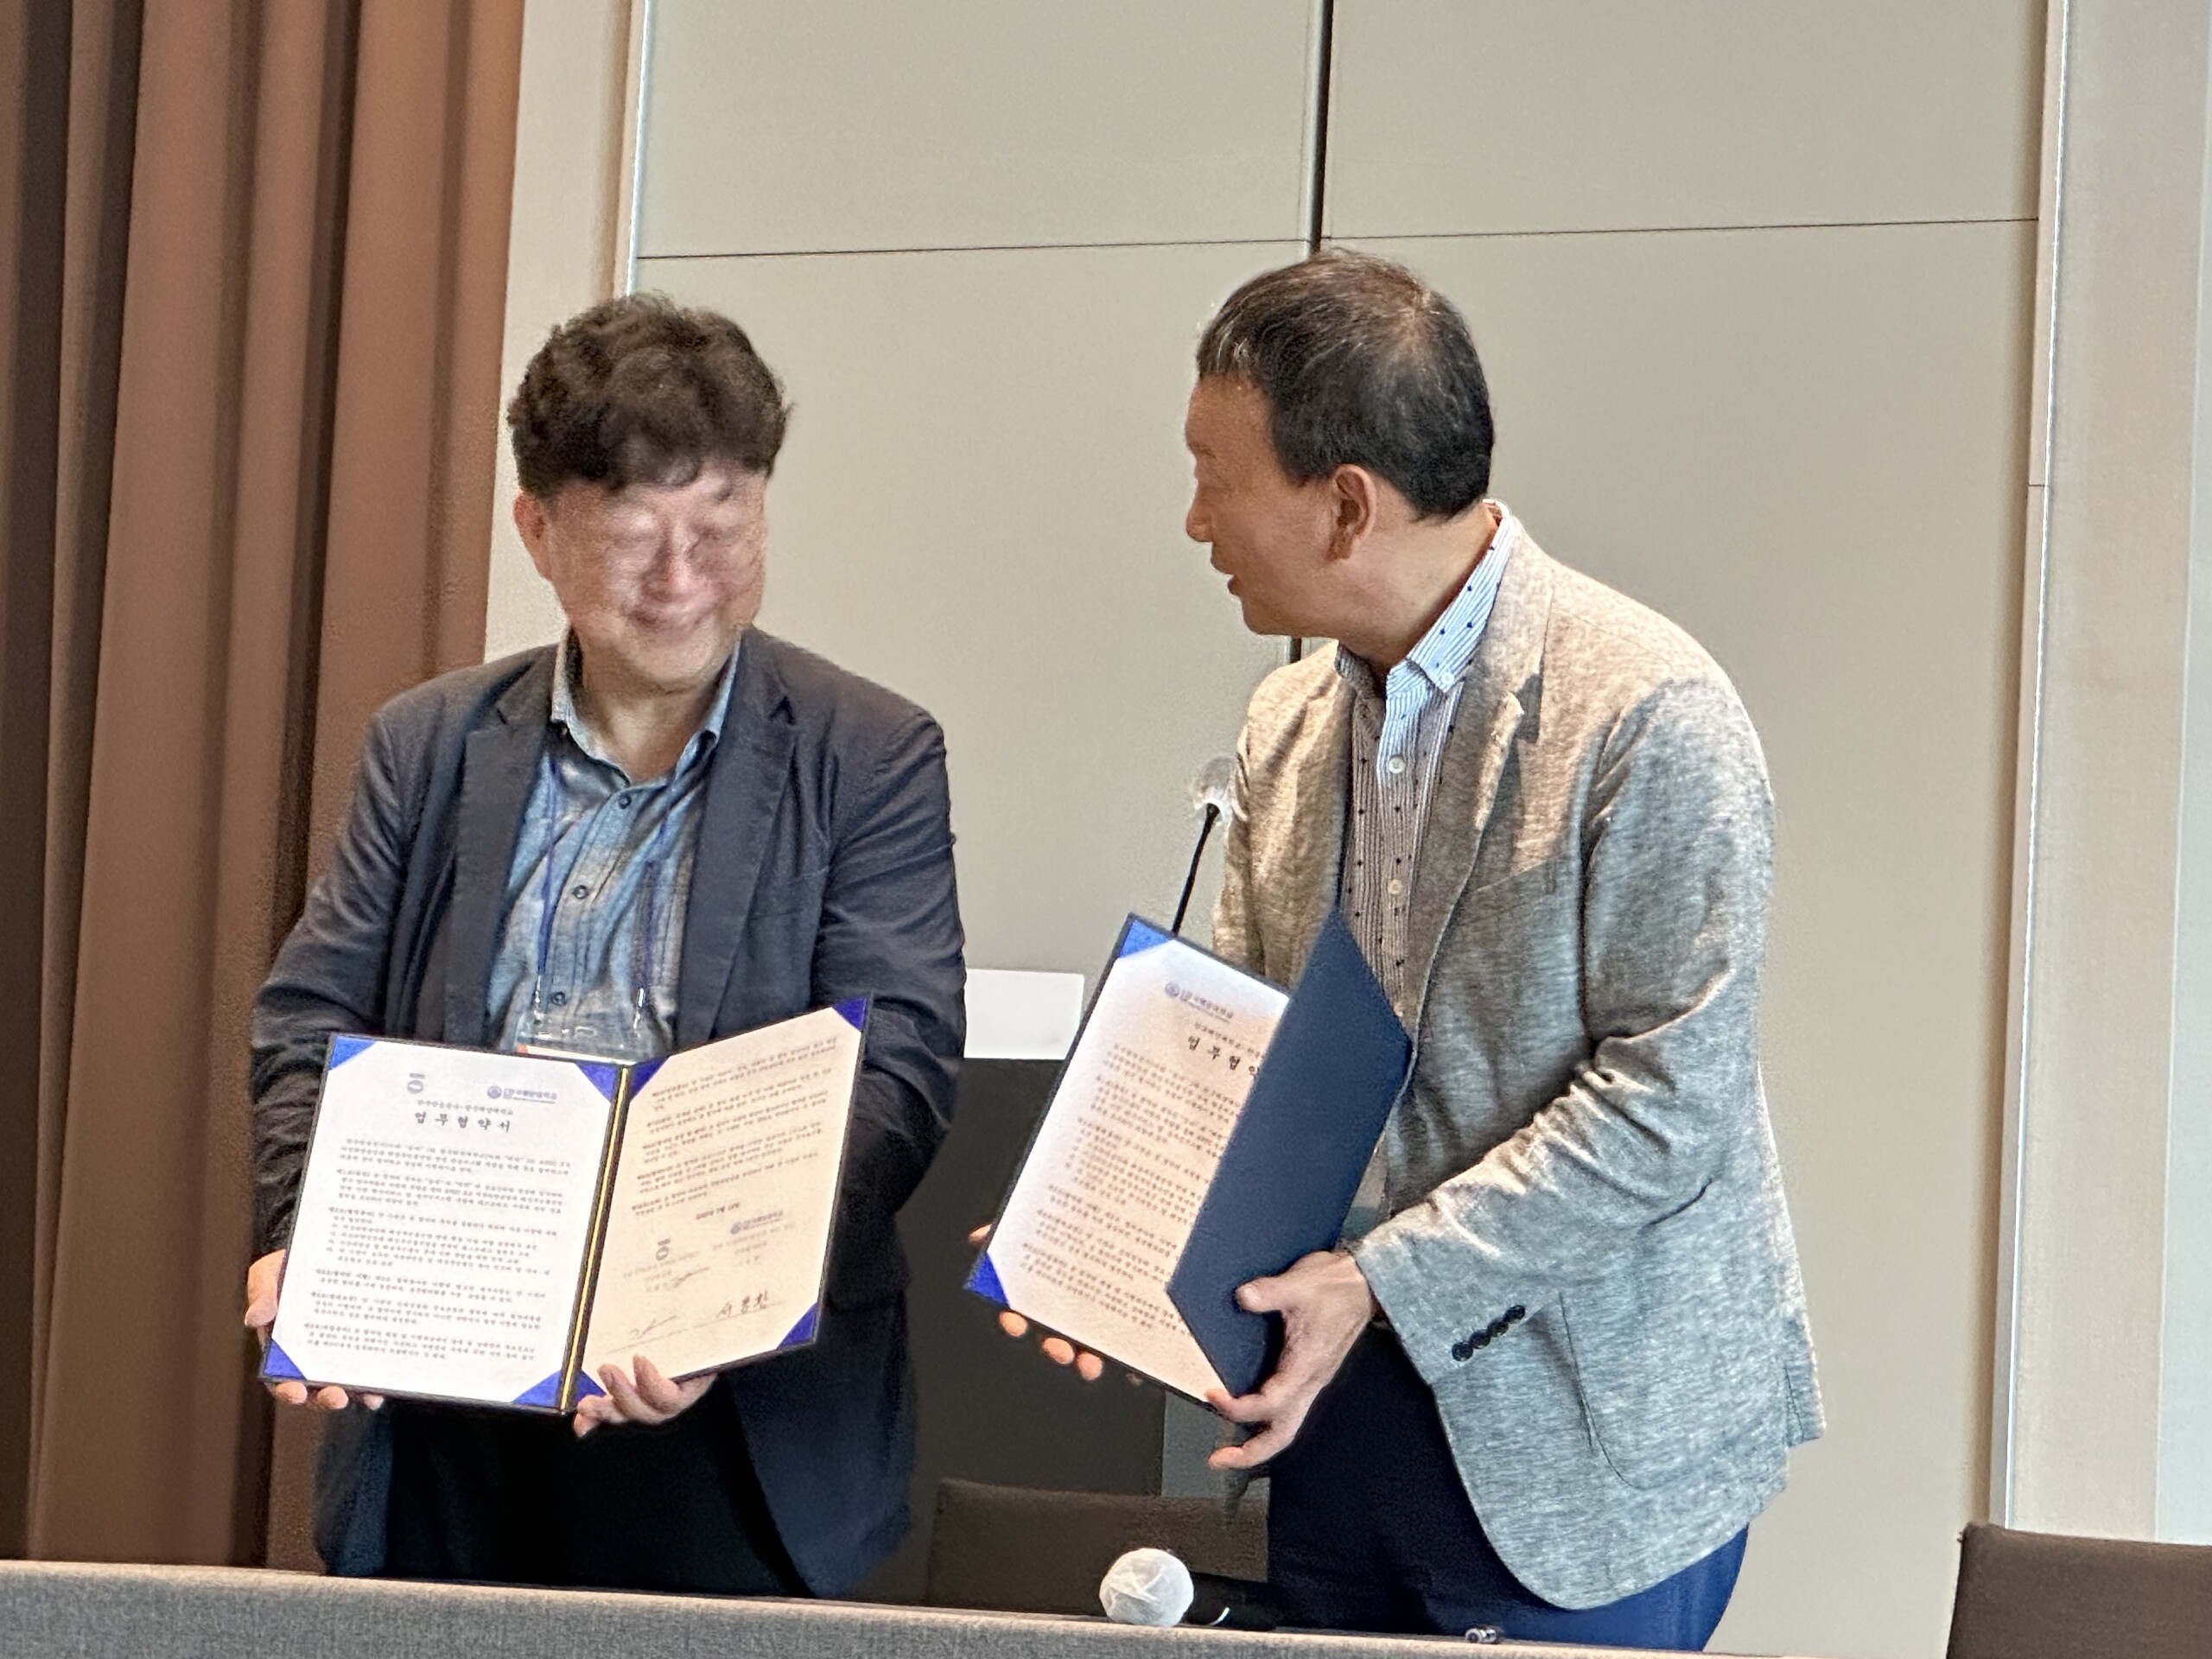 Representatives from Korea’s largest public service broadcaster, KBS, and Korean Maritime and Ocean University showcase their signed memorandum of understanding.